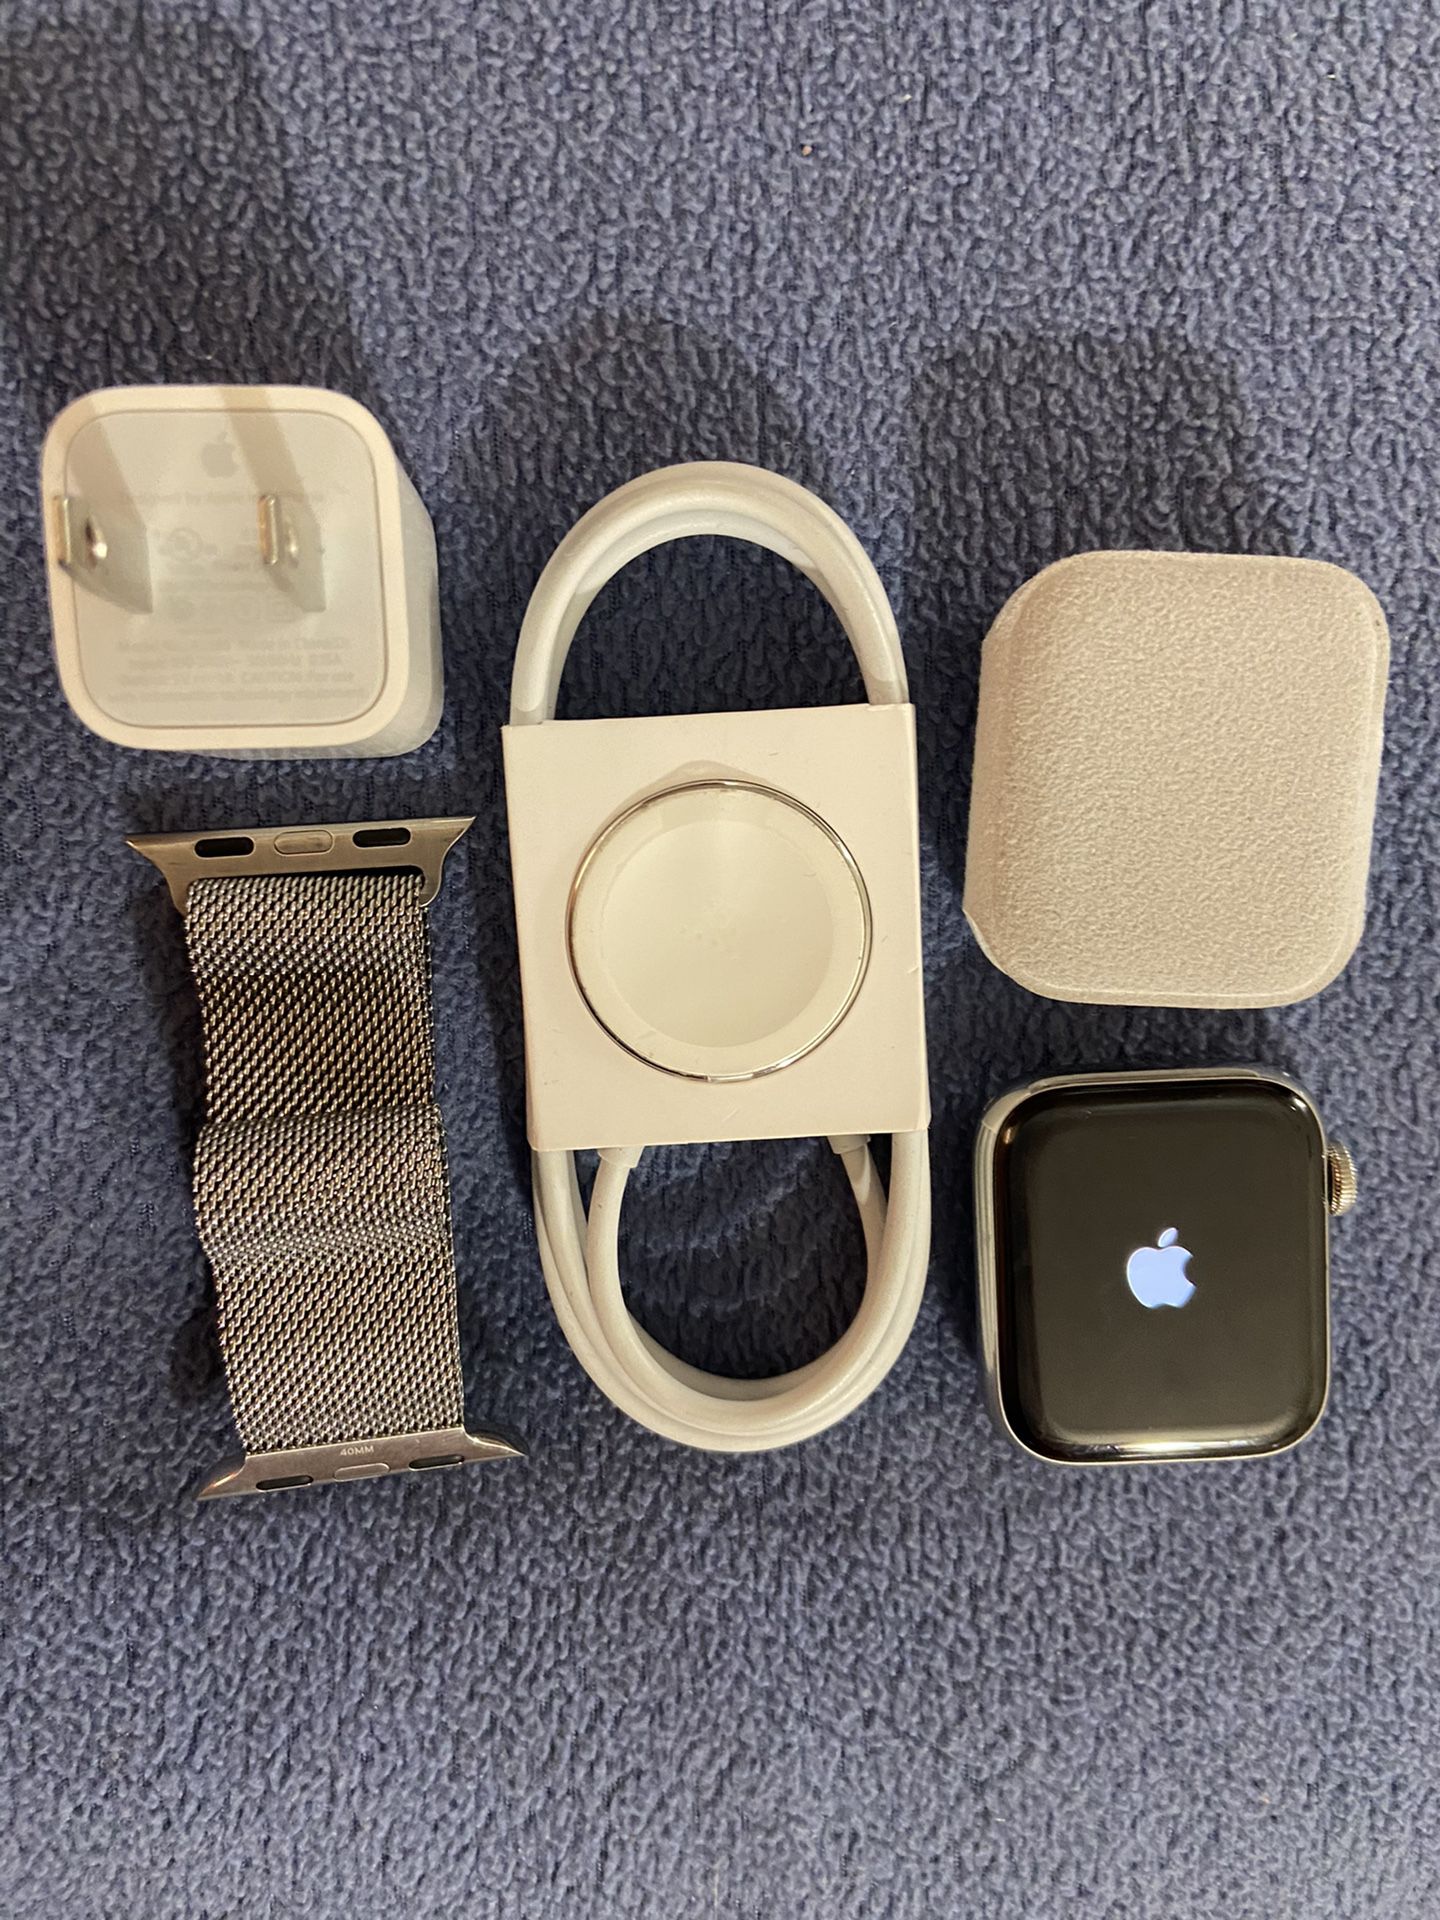 Apple Watch Series 5 40mm Cellular + GPS